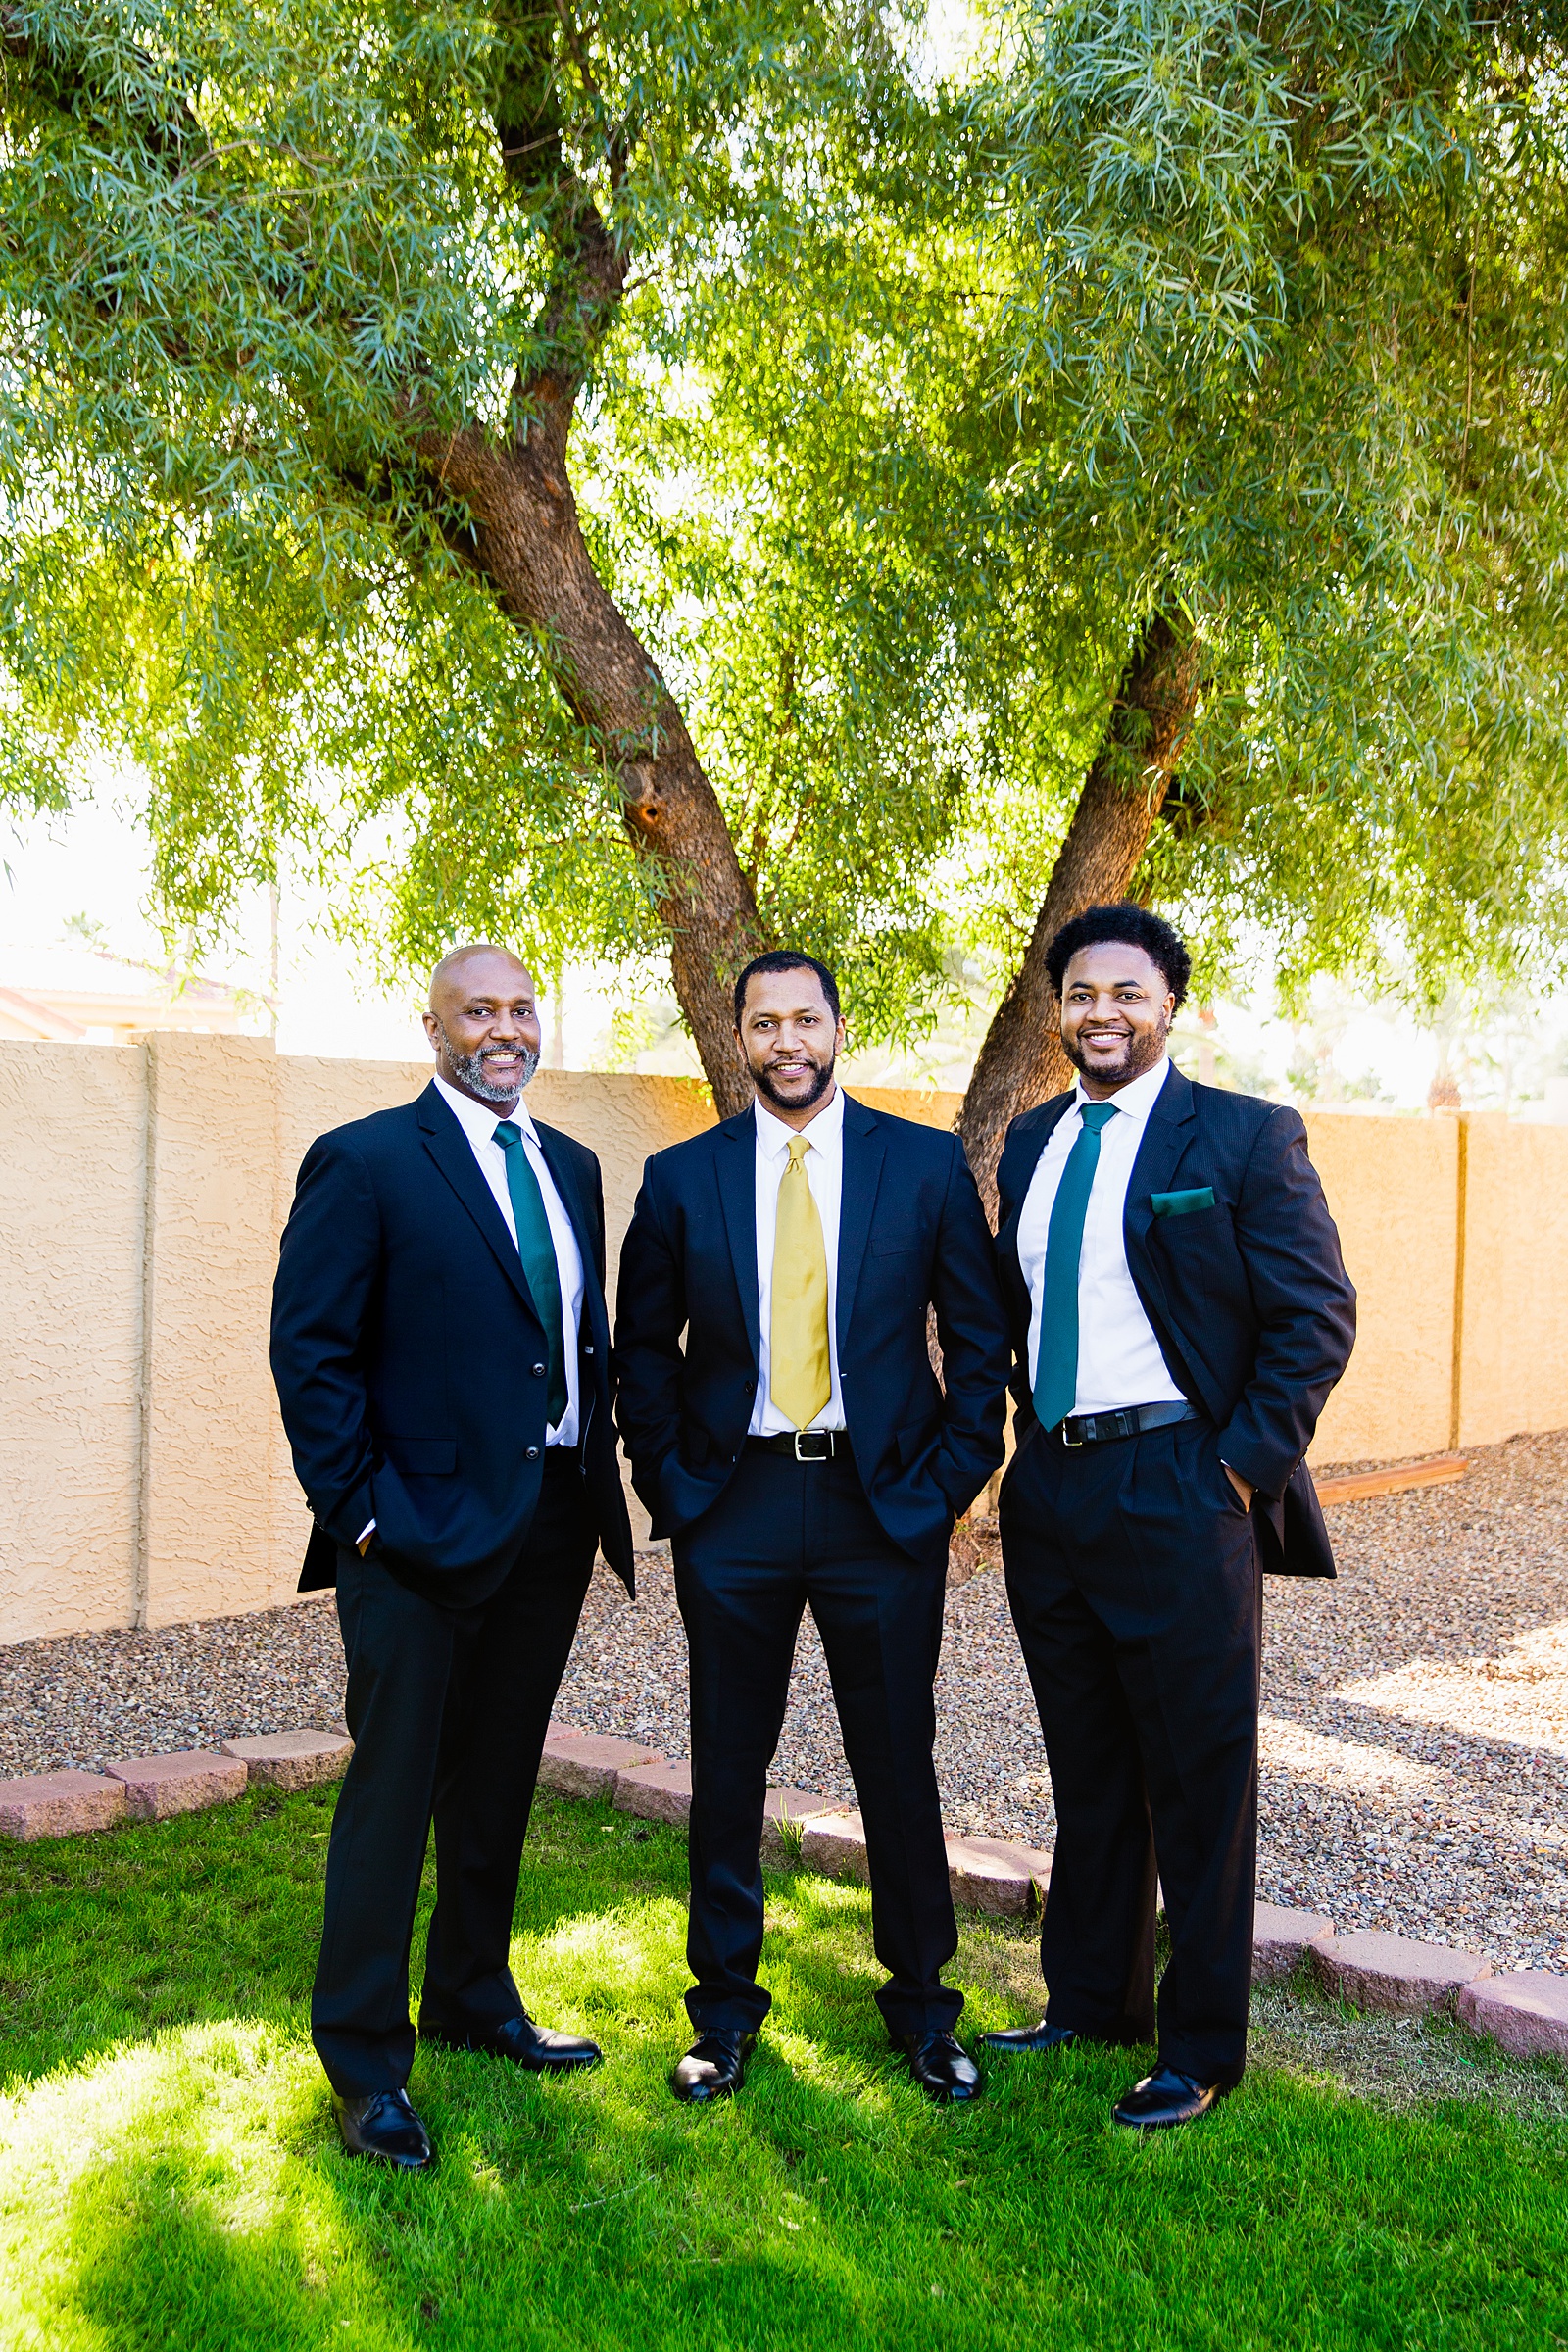 Groom and groomsmen together at a Backyard Micro wedding by Arizona wedding photographer PMA Photography.